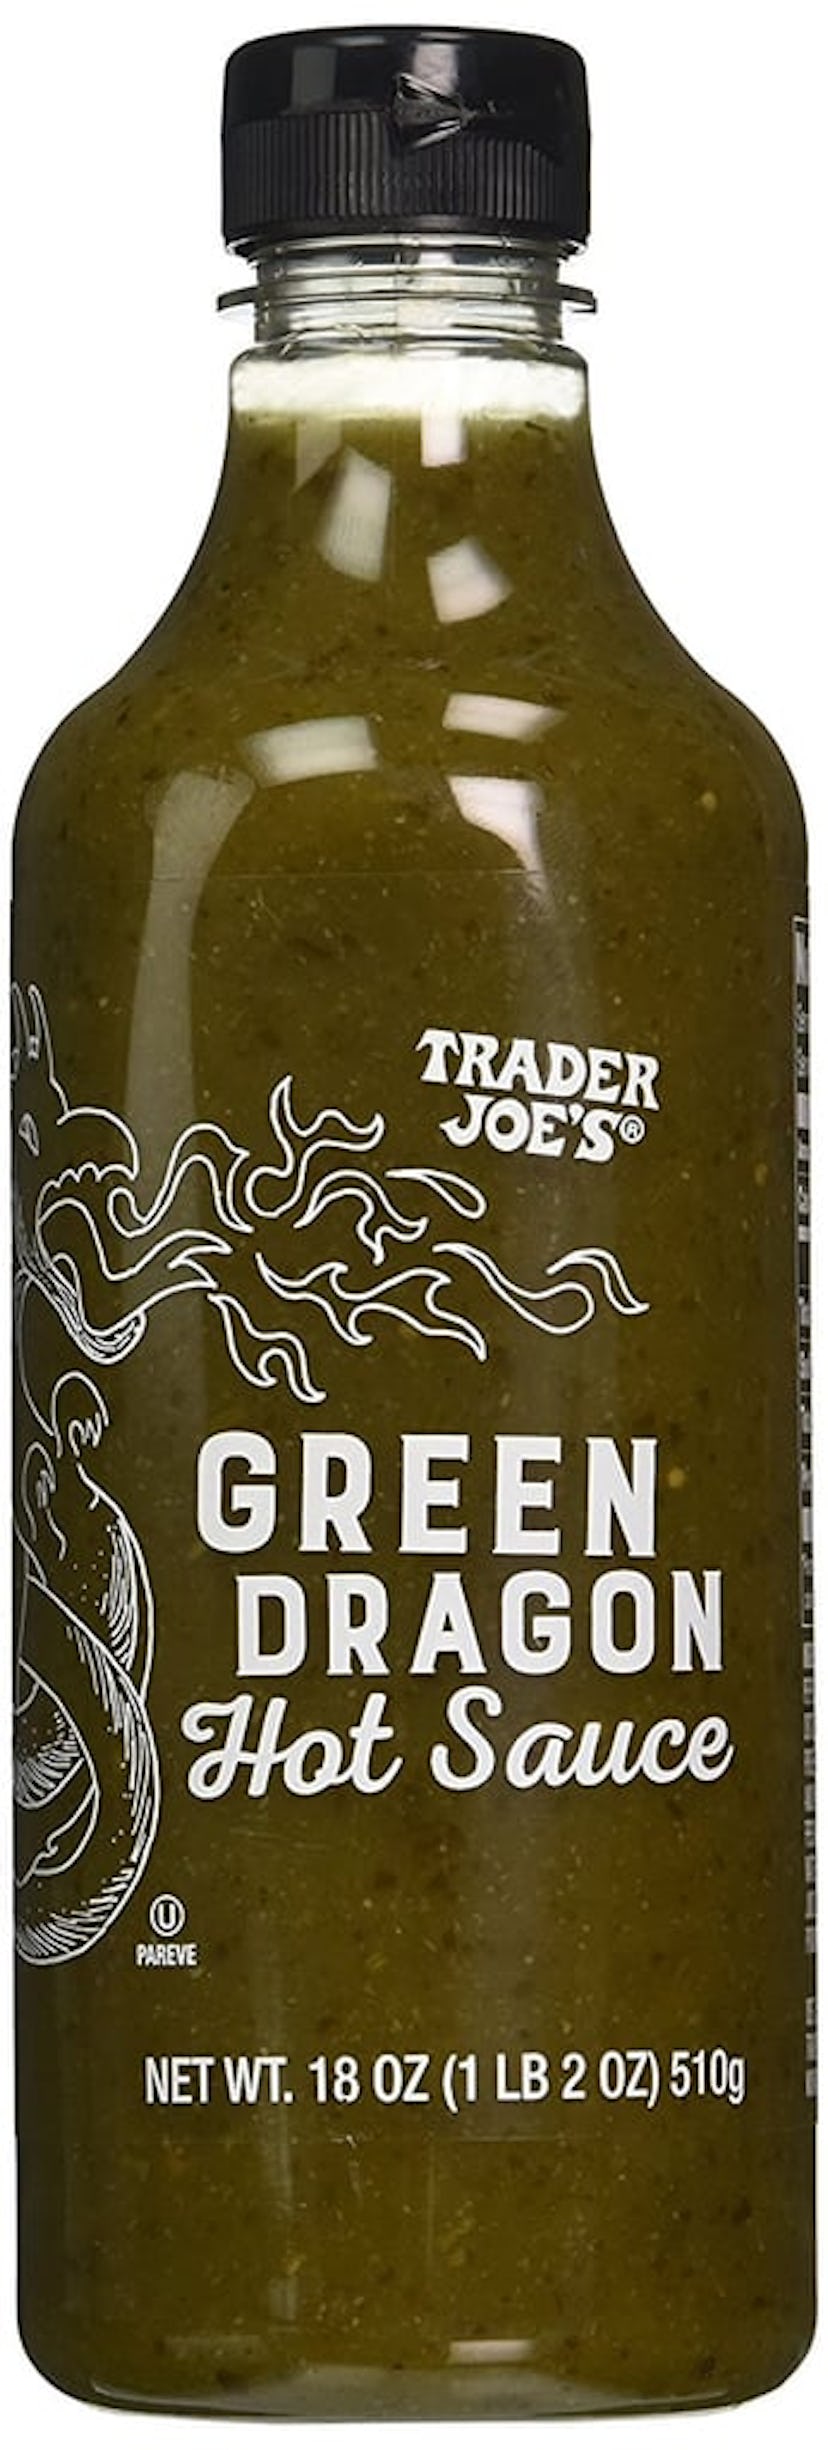 Trader Joe's Green Dragon Hot Sauce.